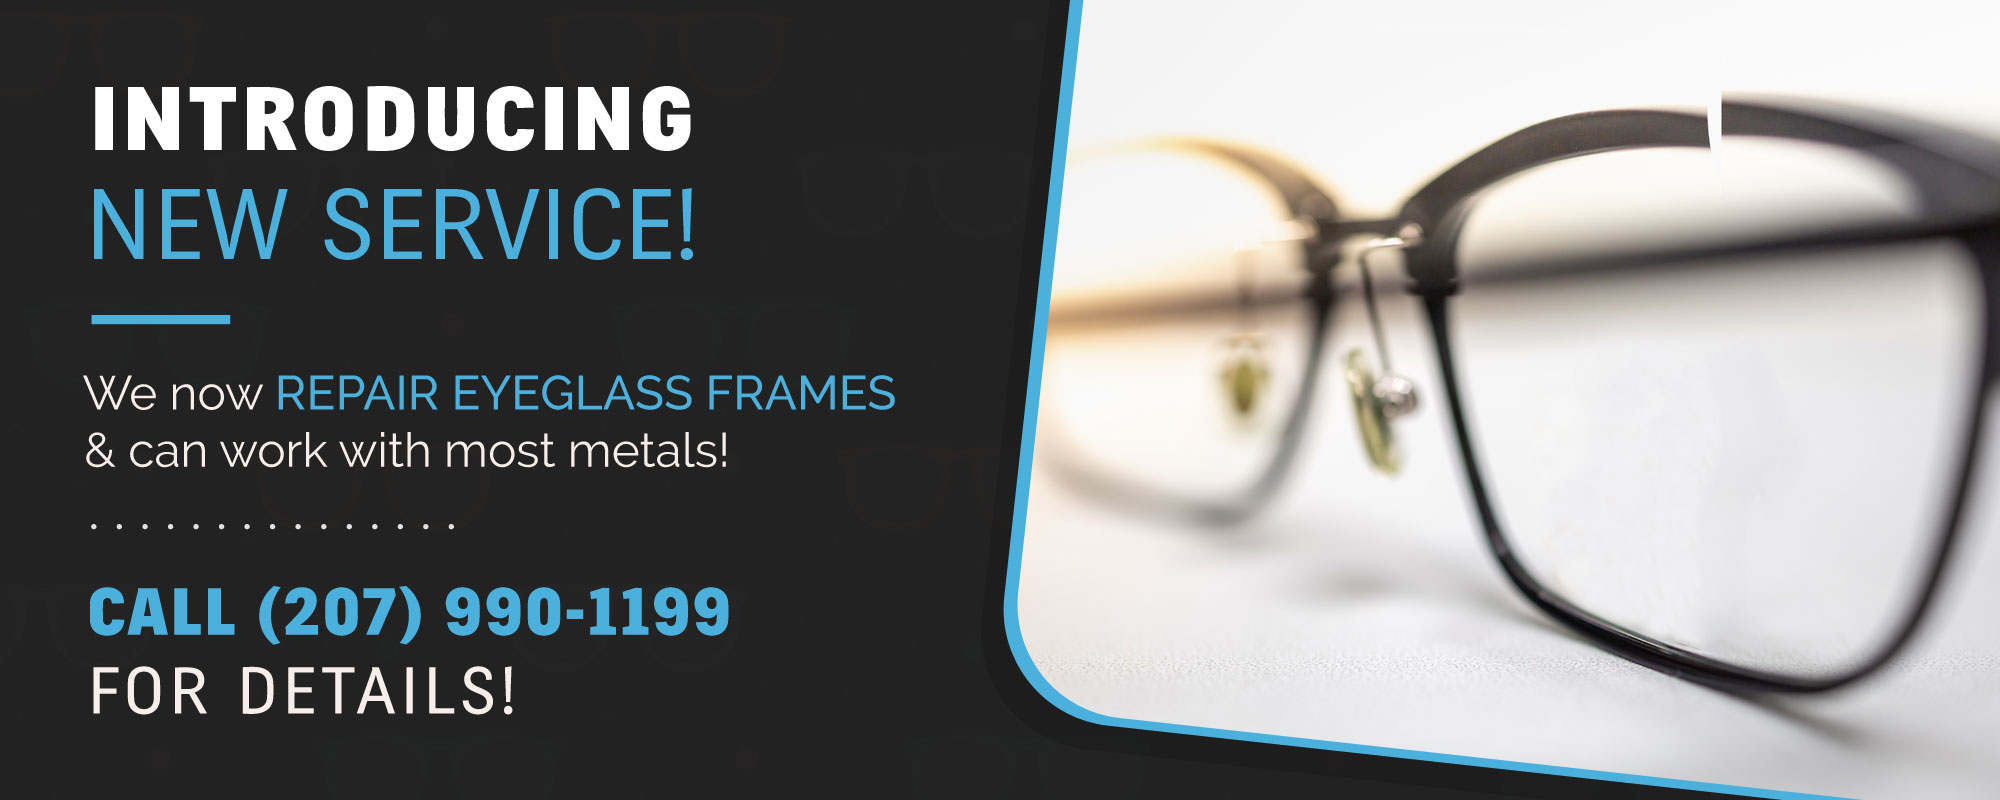 Eyeglass-Frame Repairs At Quality Jewelers